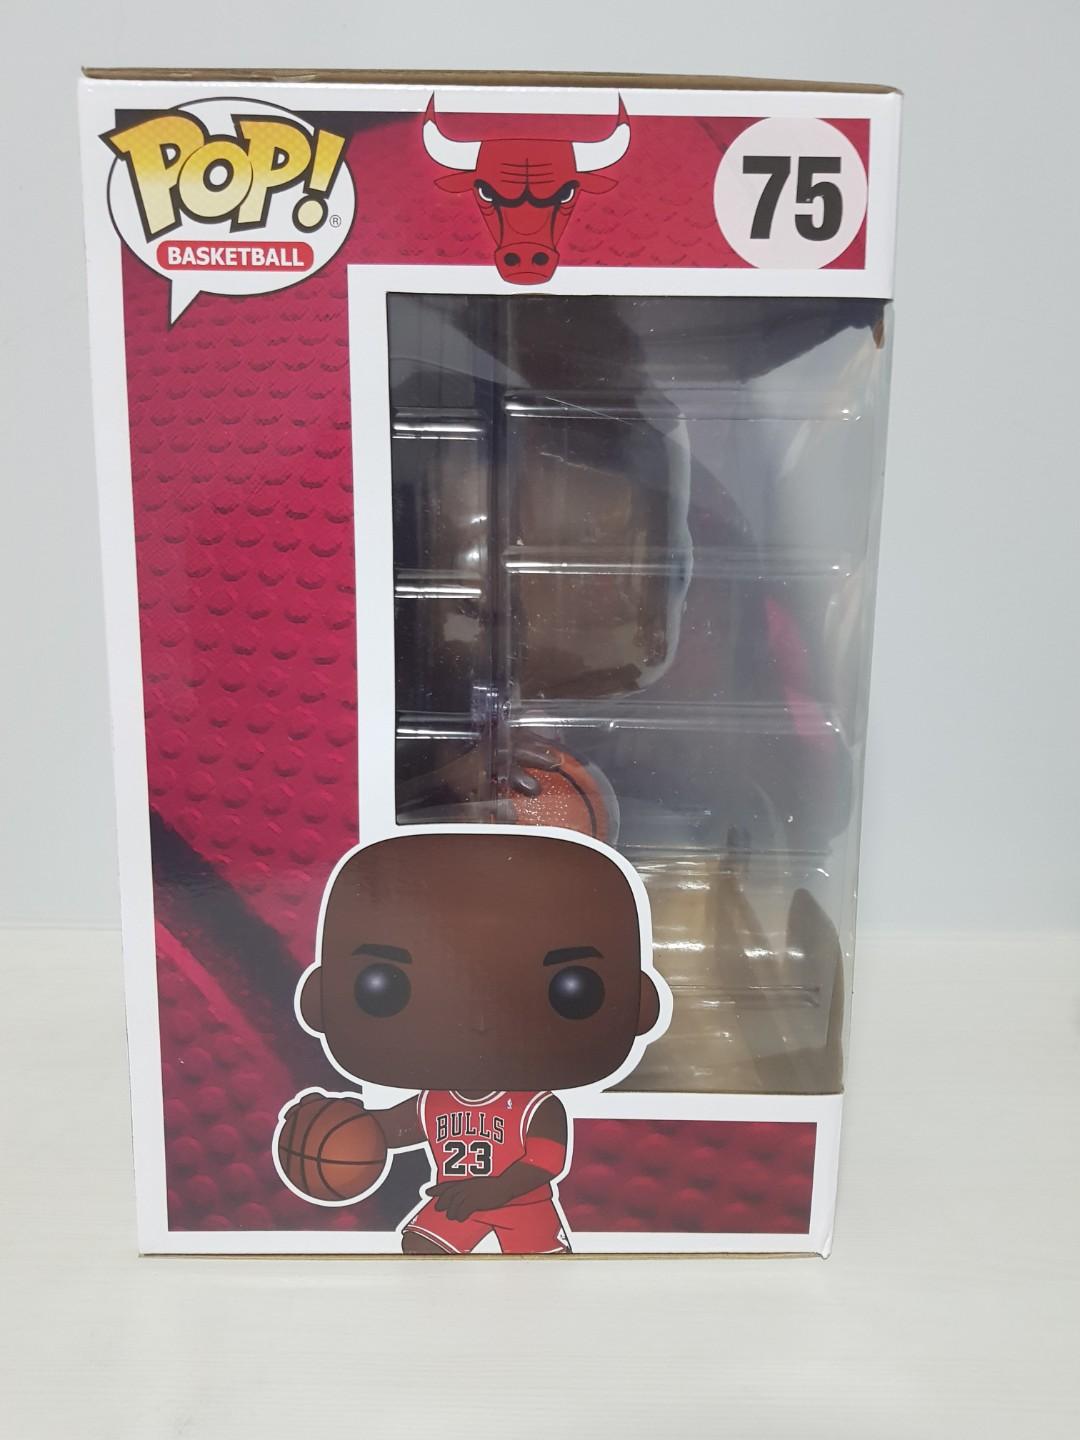 Funko Pop! Basketball Chicago Bulls Michael Jordan Bronzed Special Edition  Figure #54 - US